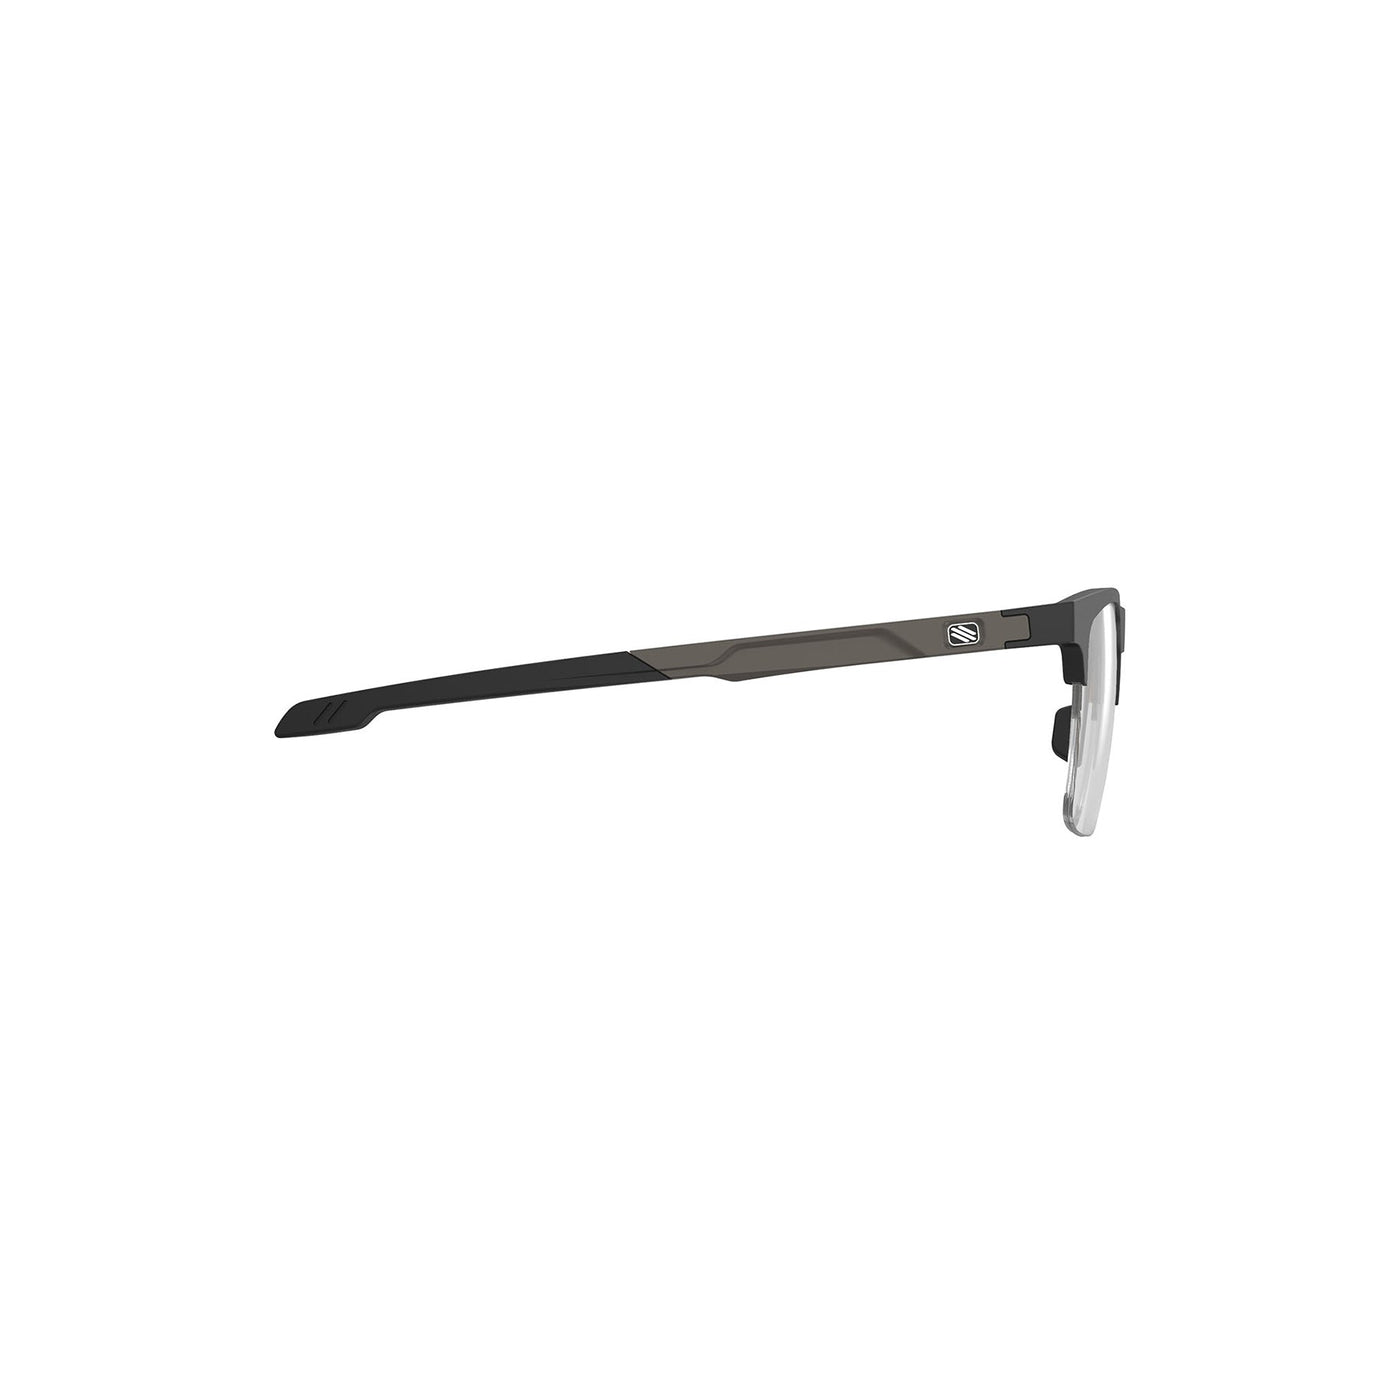 Rudy Project ophthalmic prescription eyeglass frames#color_inkas-xl-half-rim-shape-a-matte-black